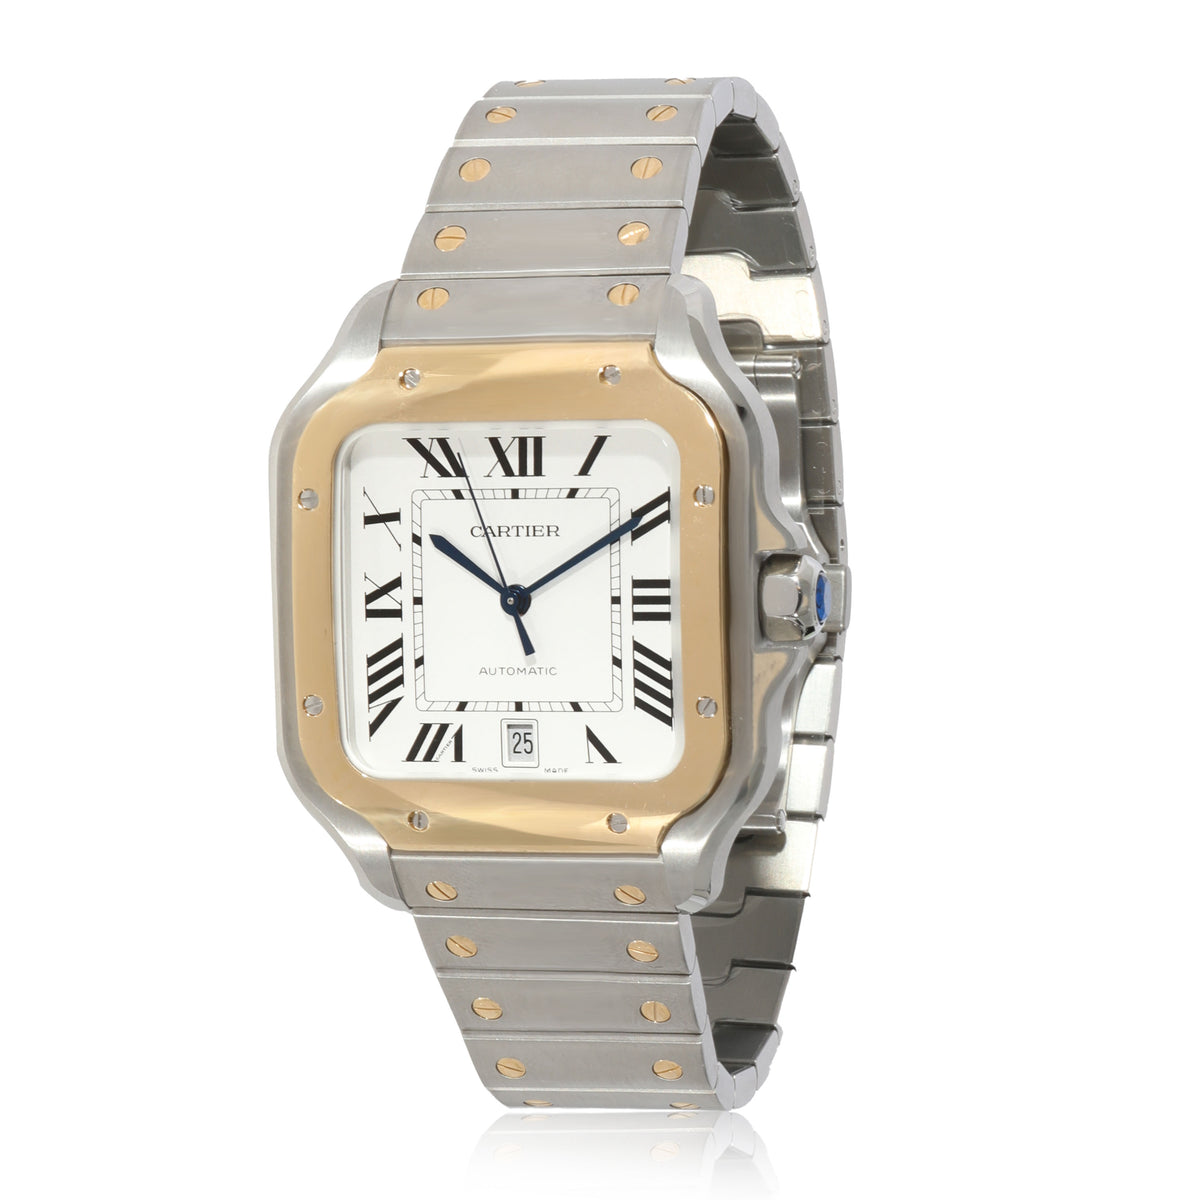 Cartier Santos de Cartier W2SA0009 Men's Watch in 18kt Stainless Steel/Yellow Go